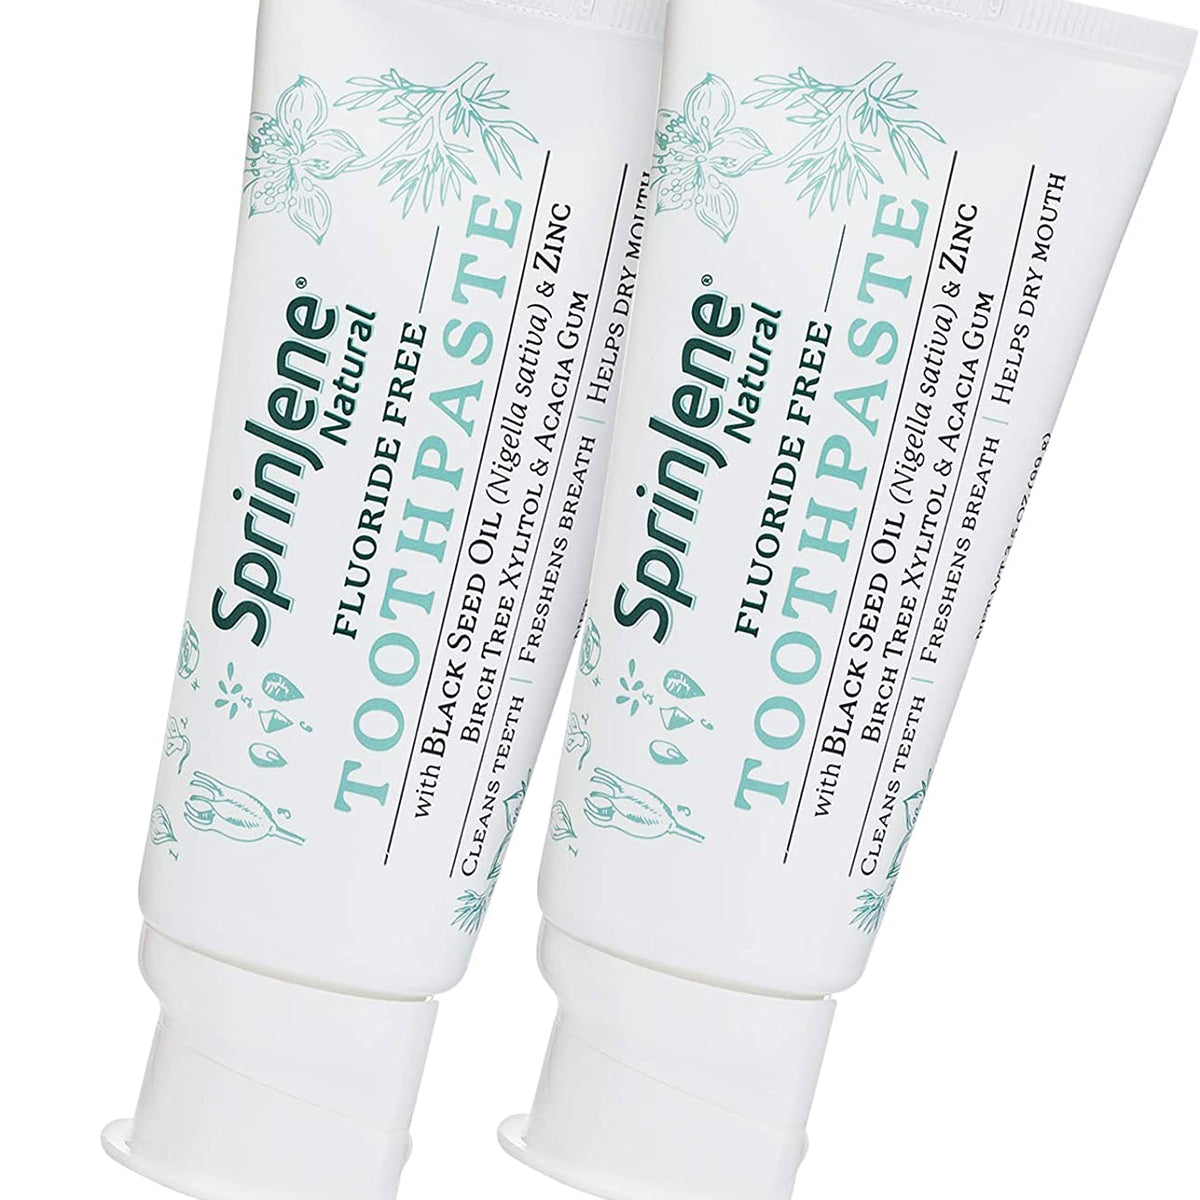 SprinJene Natural® Fluoride Free Toothpaste